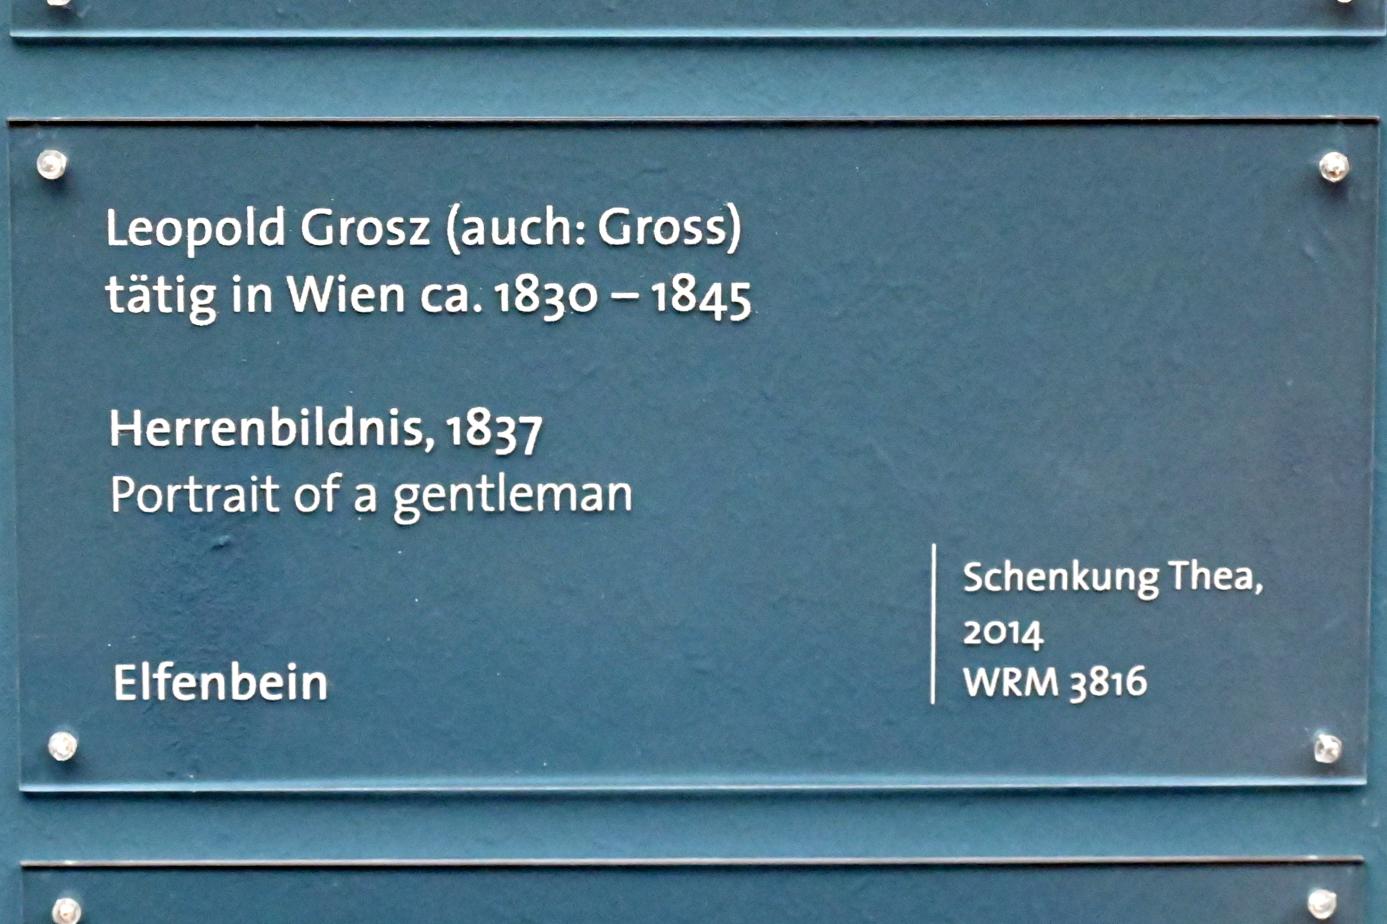 Leopold Gross (1837–1841), Herrenbildnis, Köln, Wallraf-Richartz-Museum, Barock - Saal 9, 1837, Bild 2/2